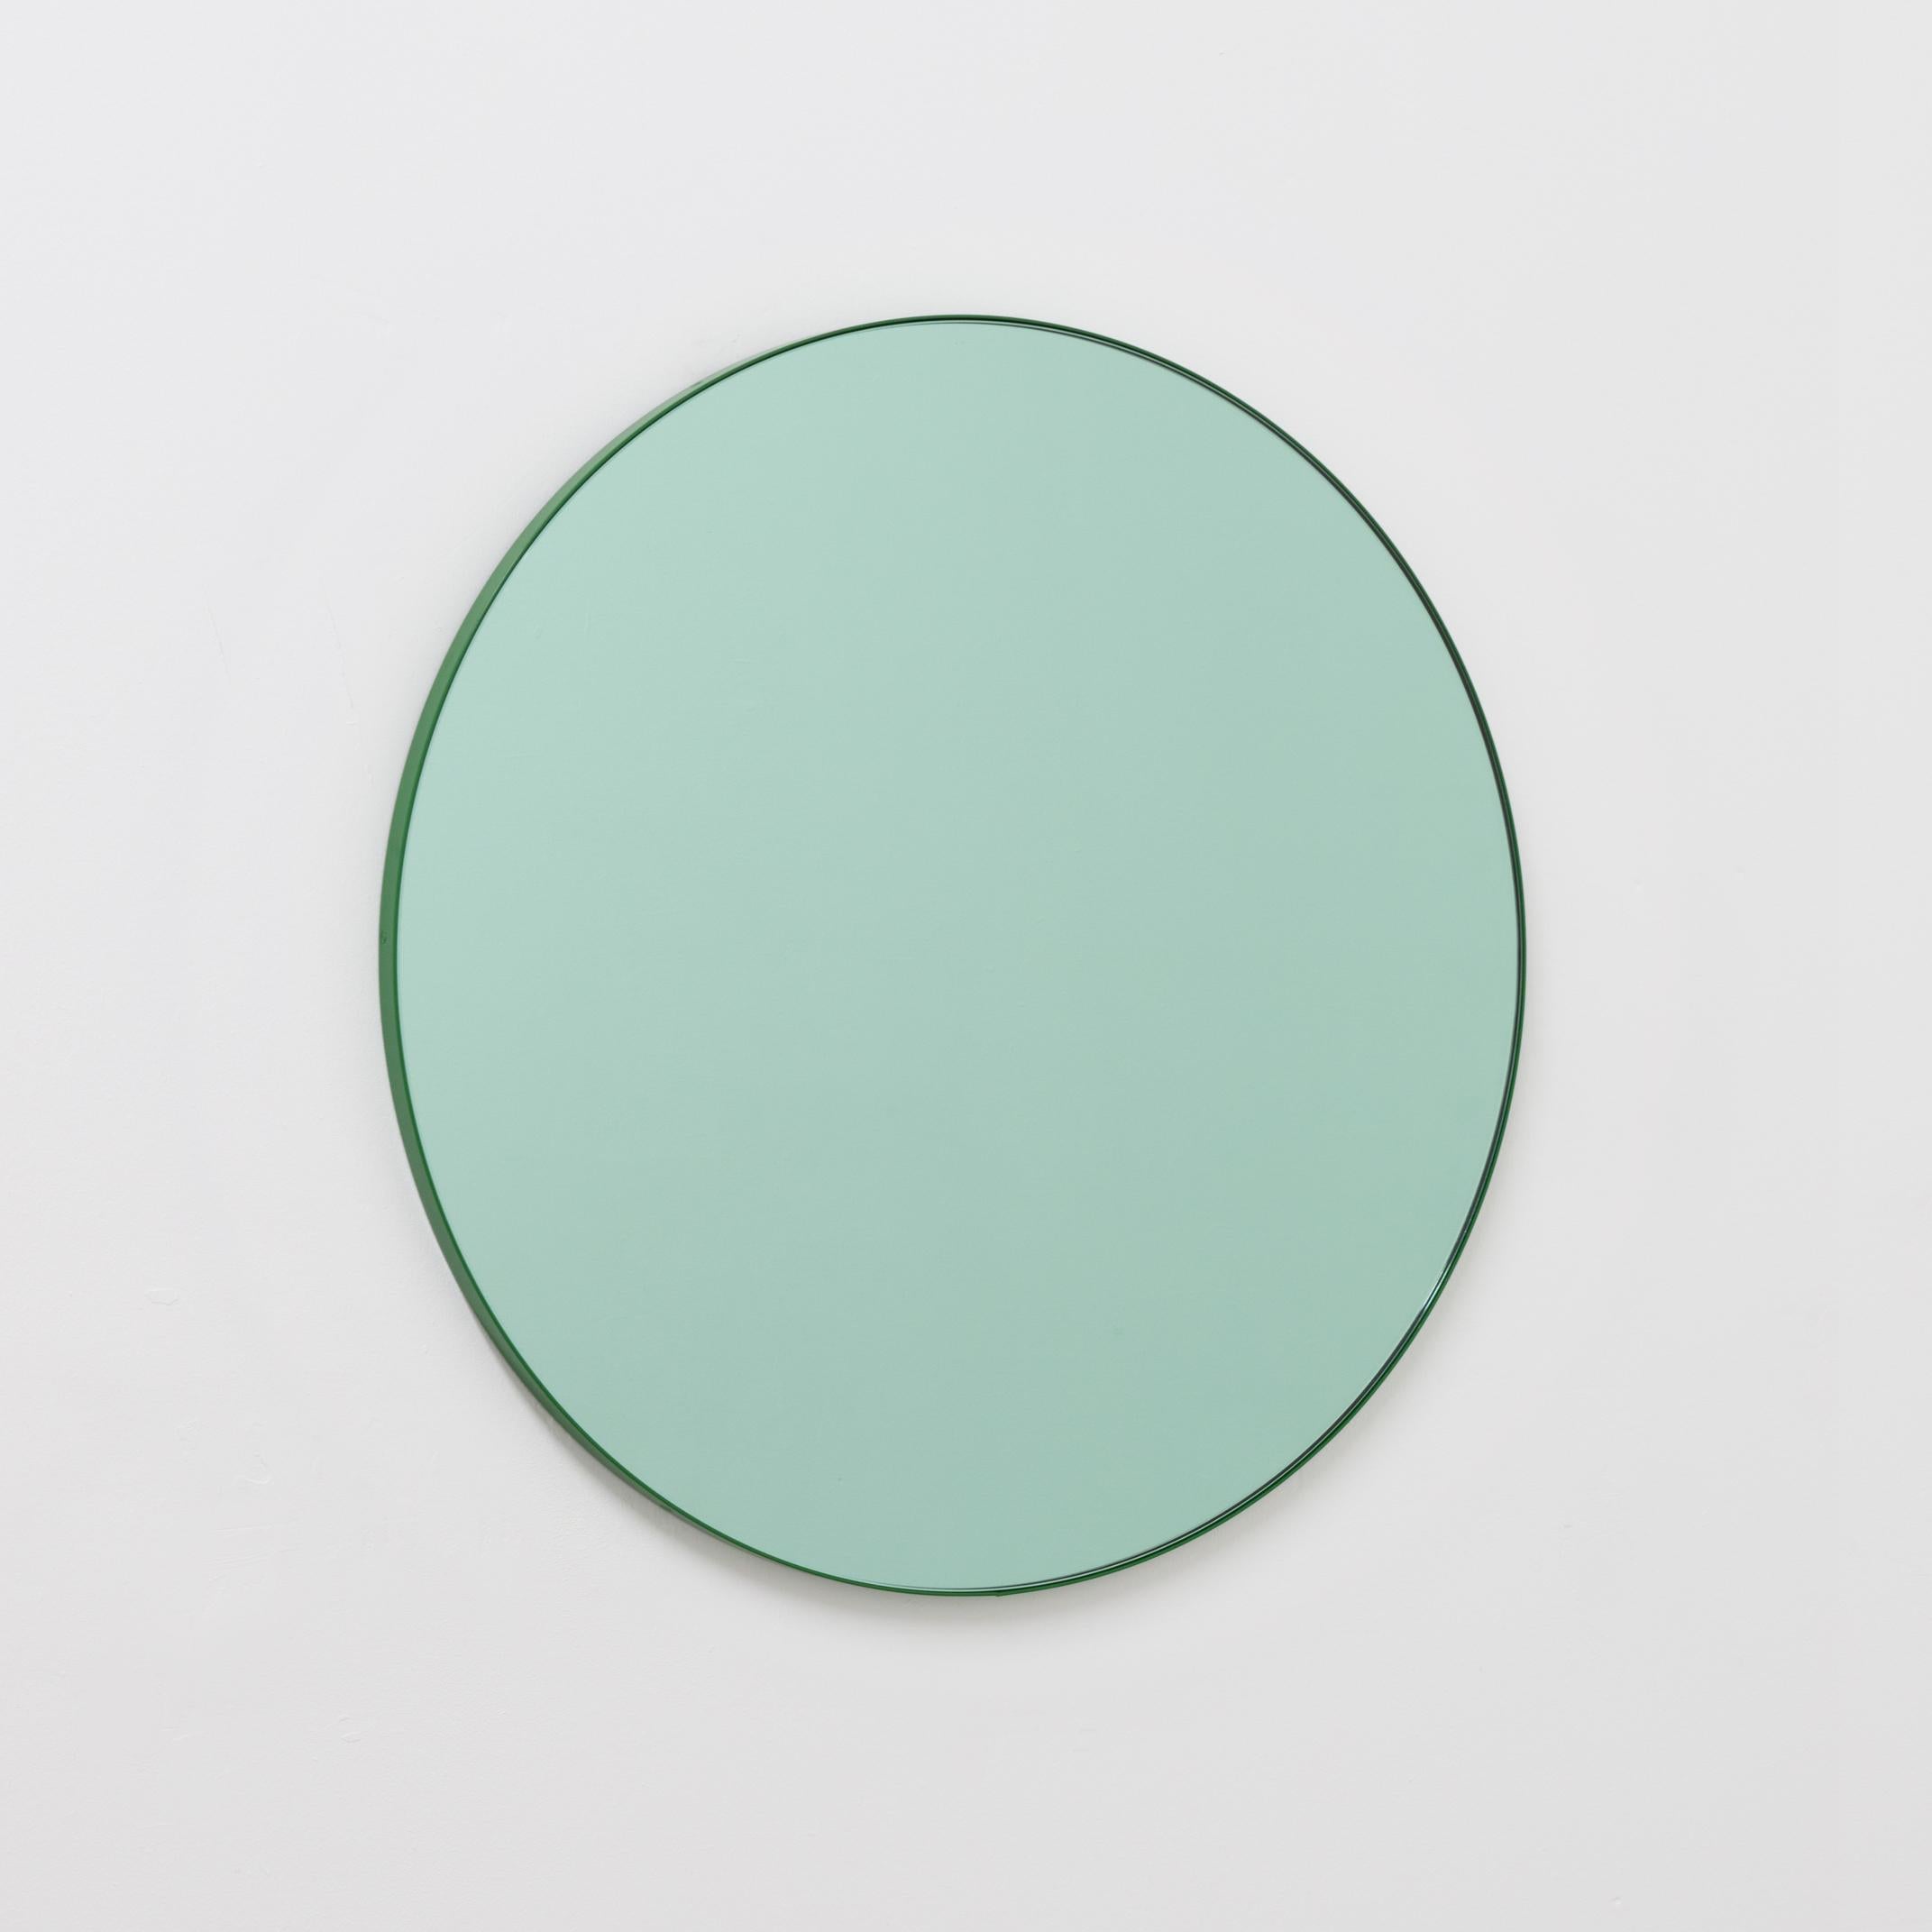 British Orbis Green Tinted Handcrafted Round Mirror with Green Frame, Regular